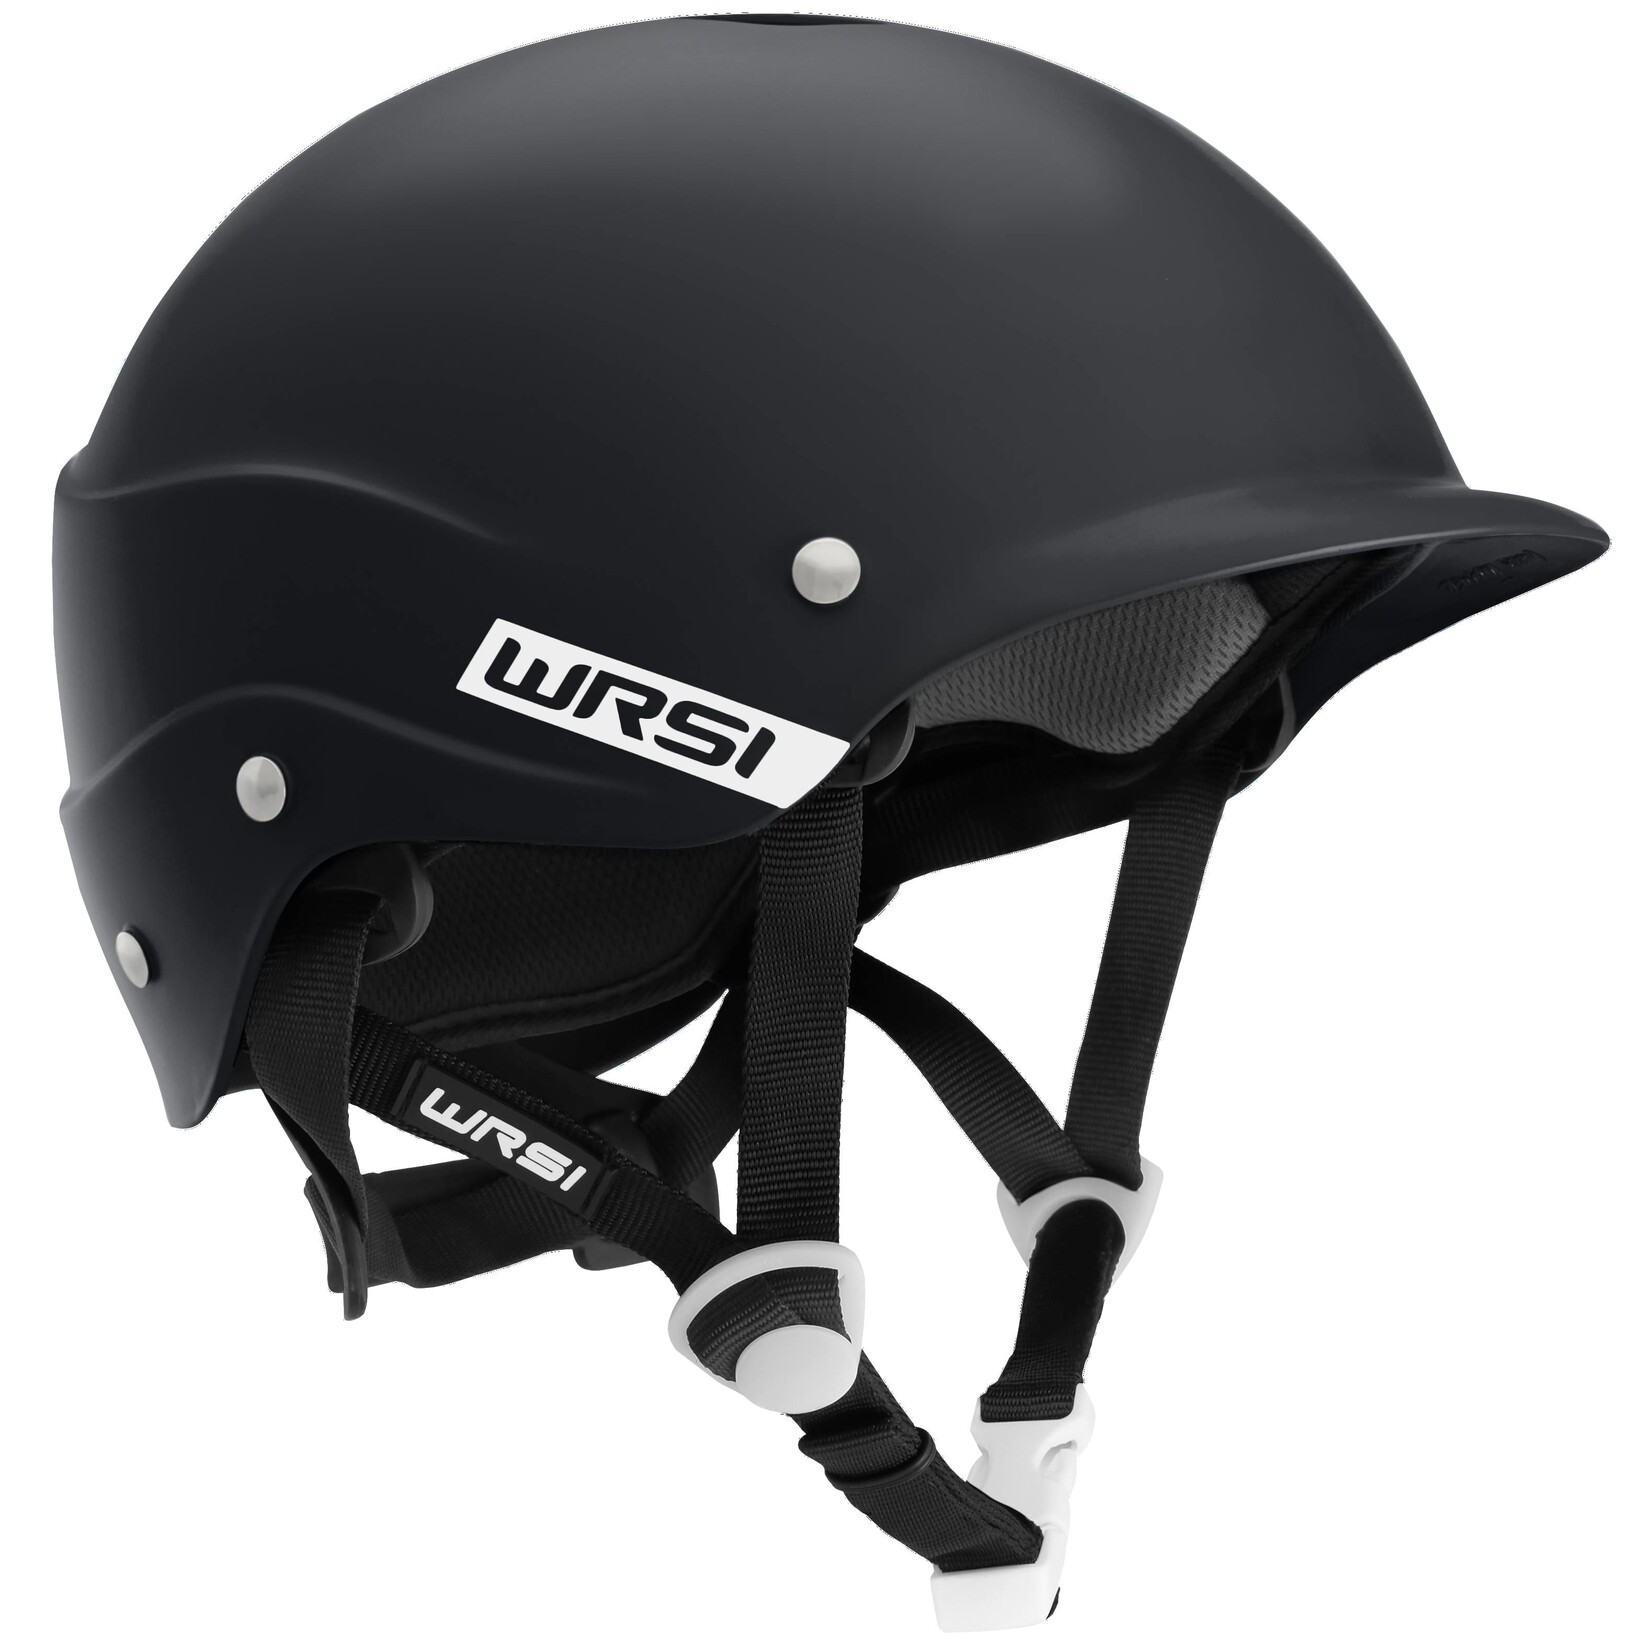 NRS - WRSI Current Helmet